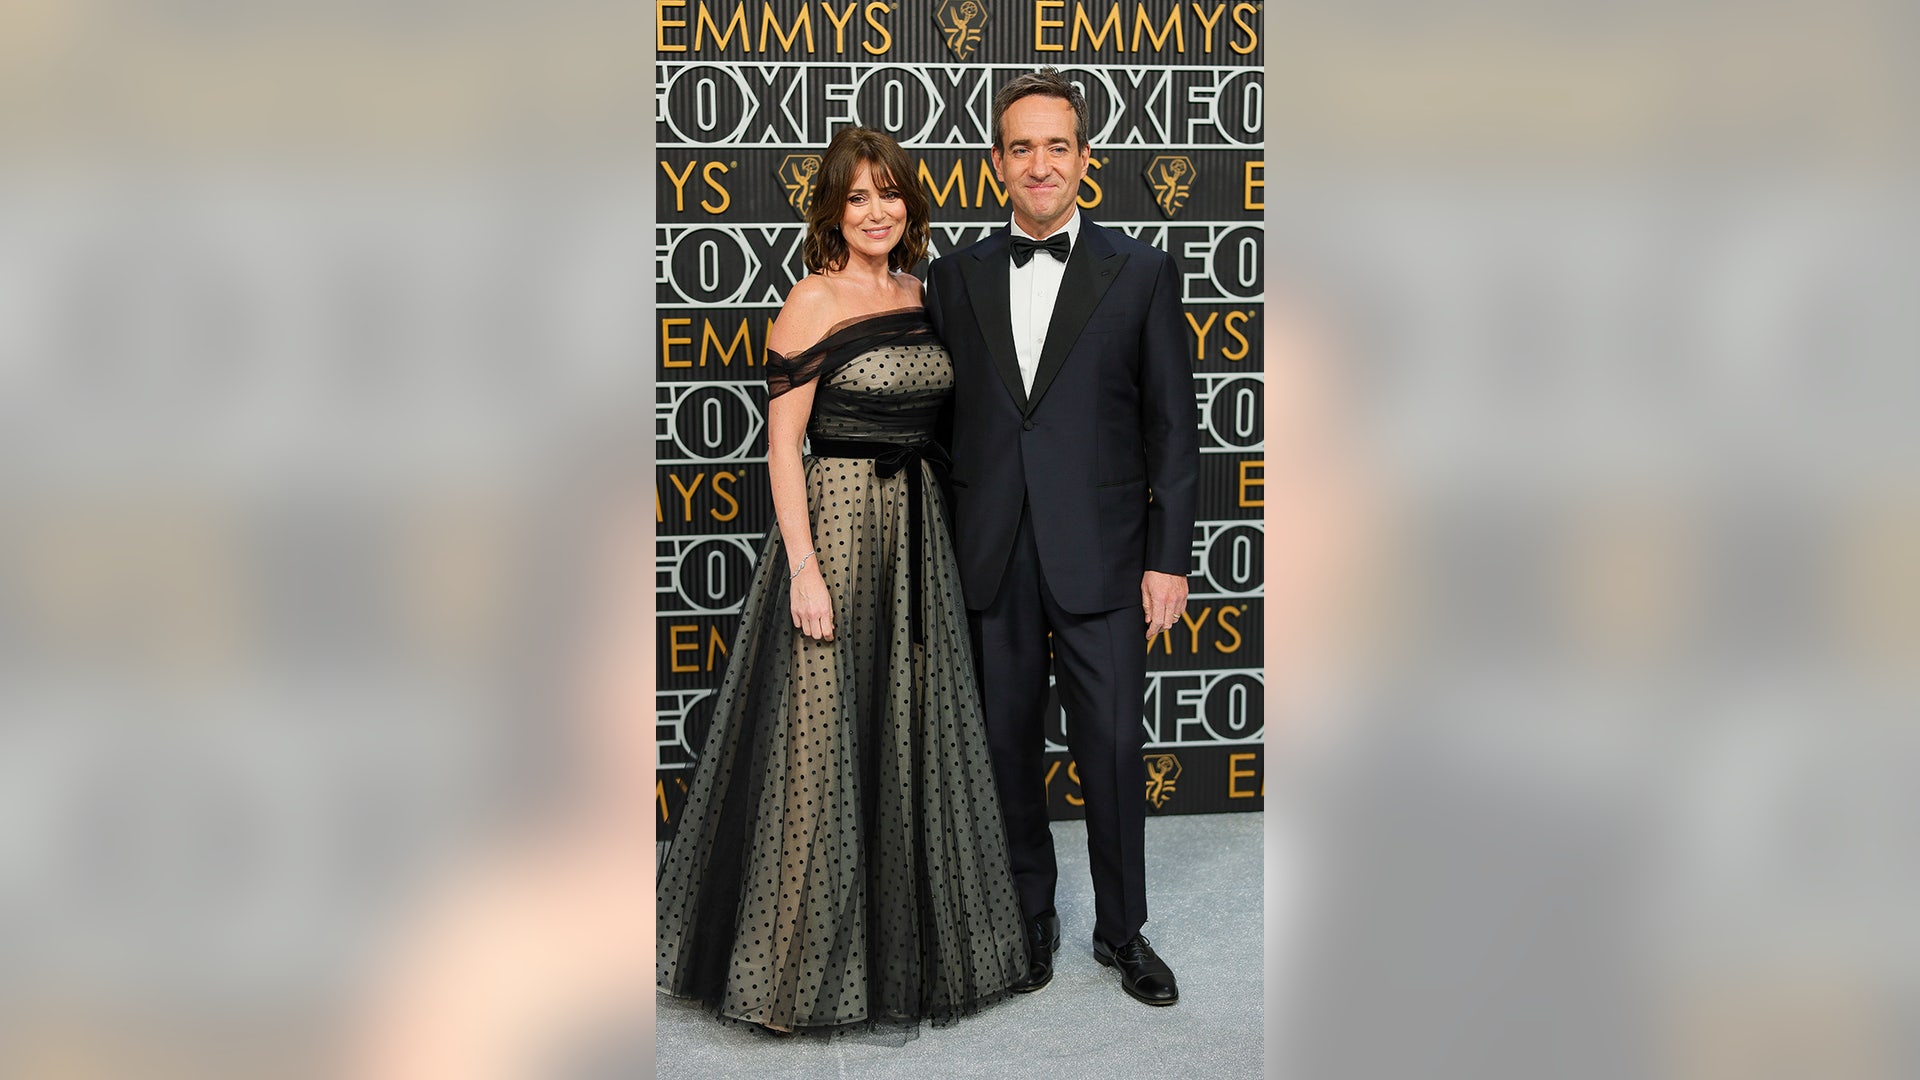 75th Emmy Awards red carpet PHOTOS Fox News